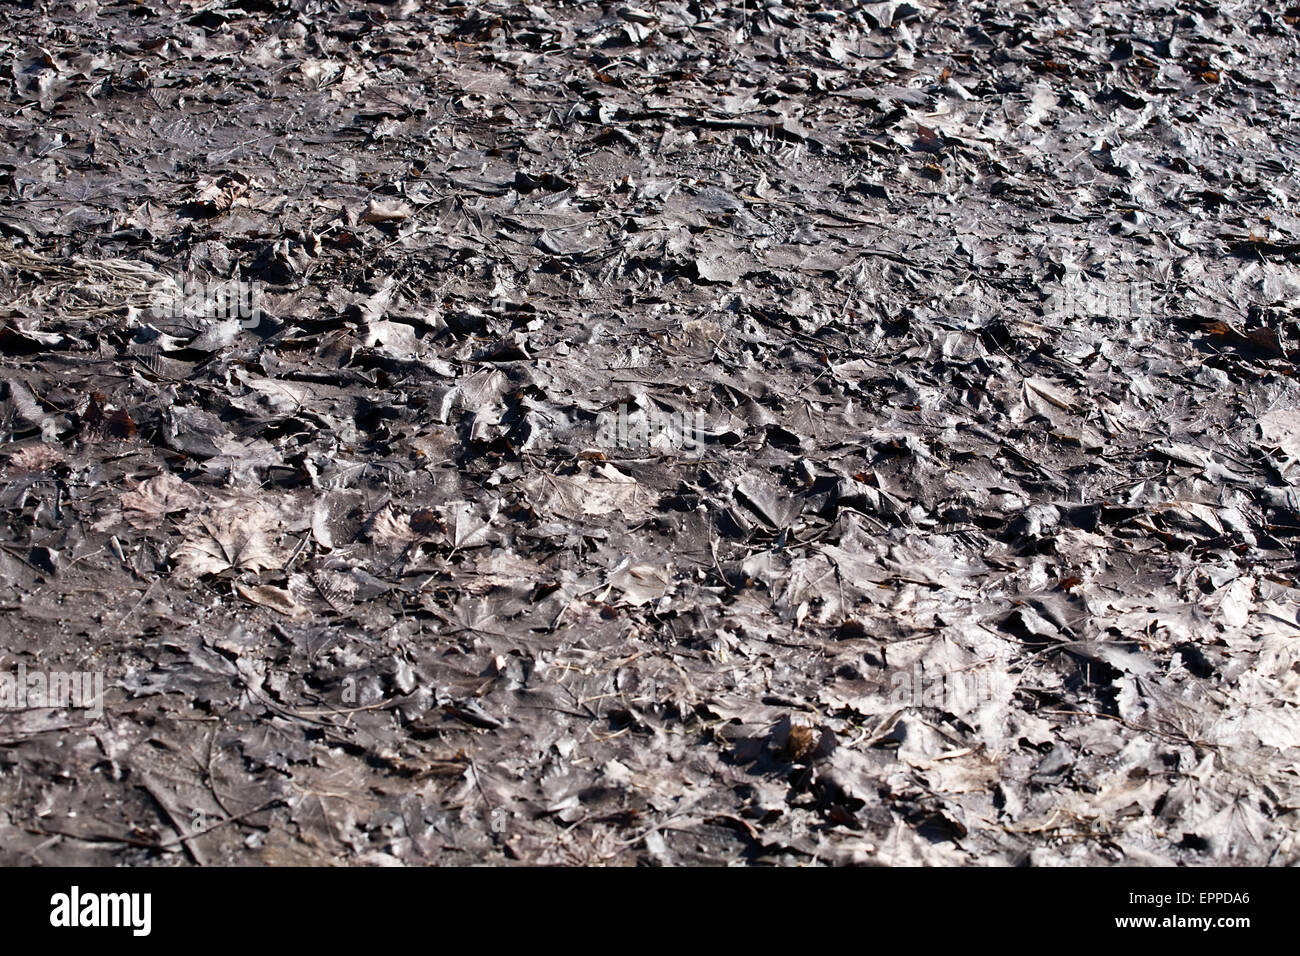 black rotten leaves ground carpet pattern background closeup Stock Photo